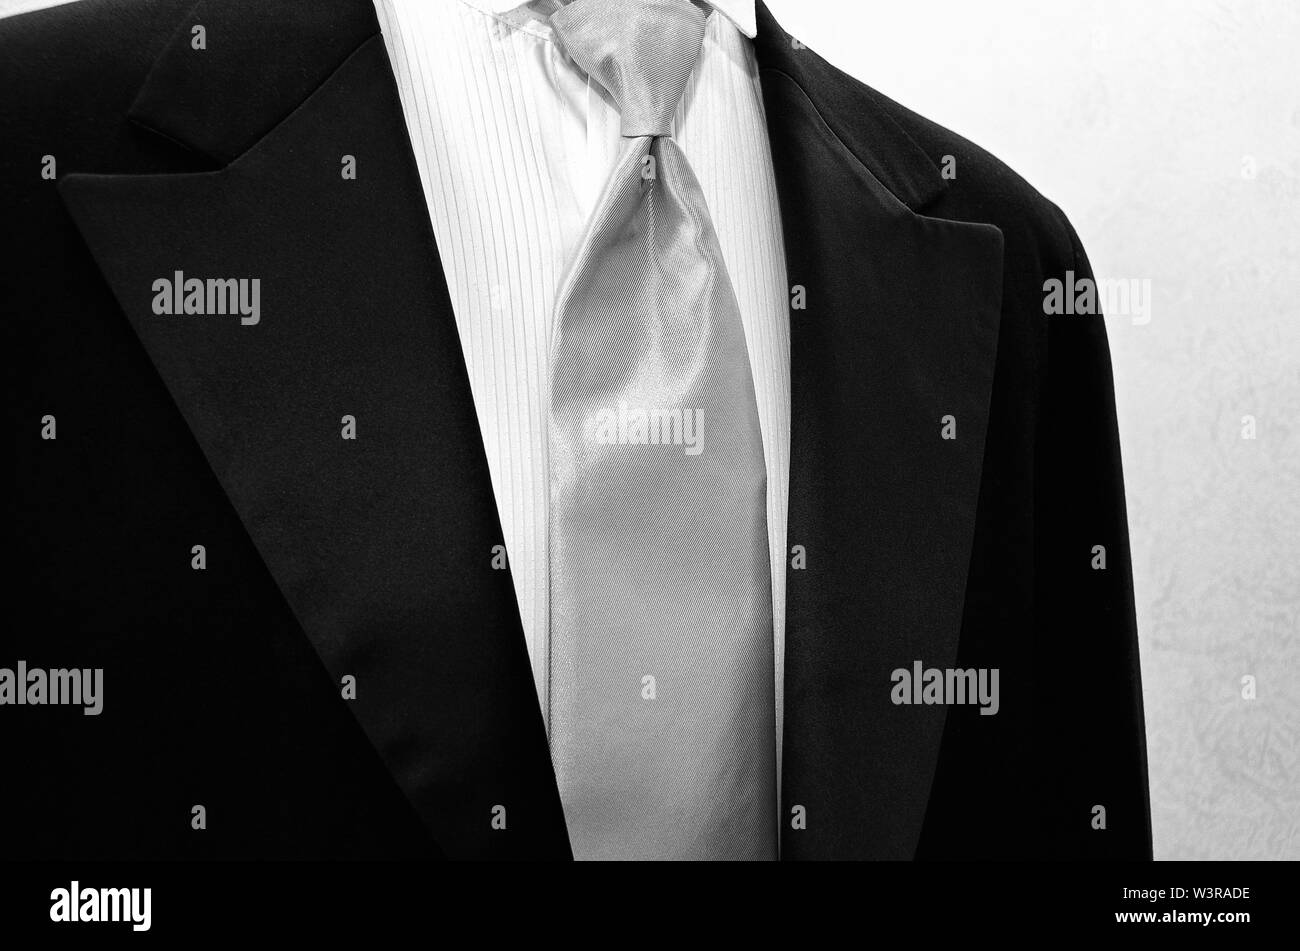 Black necktie tuxedo shirt hi-res stock photography and images - Alamy